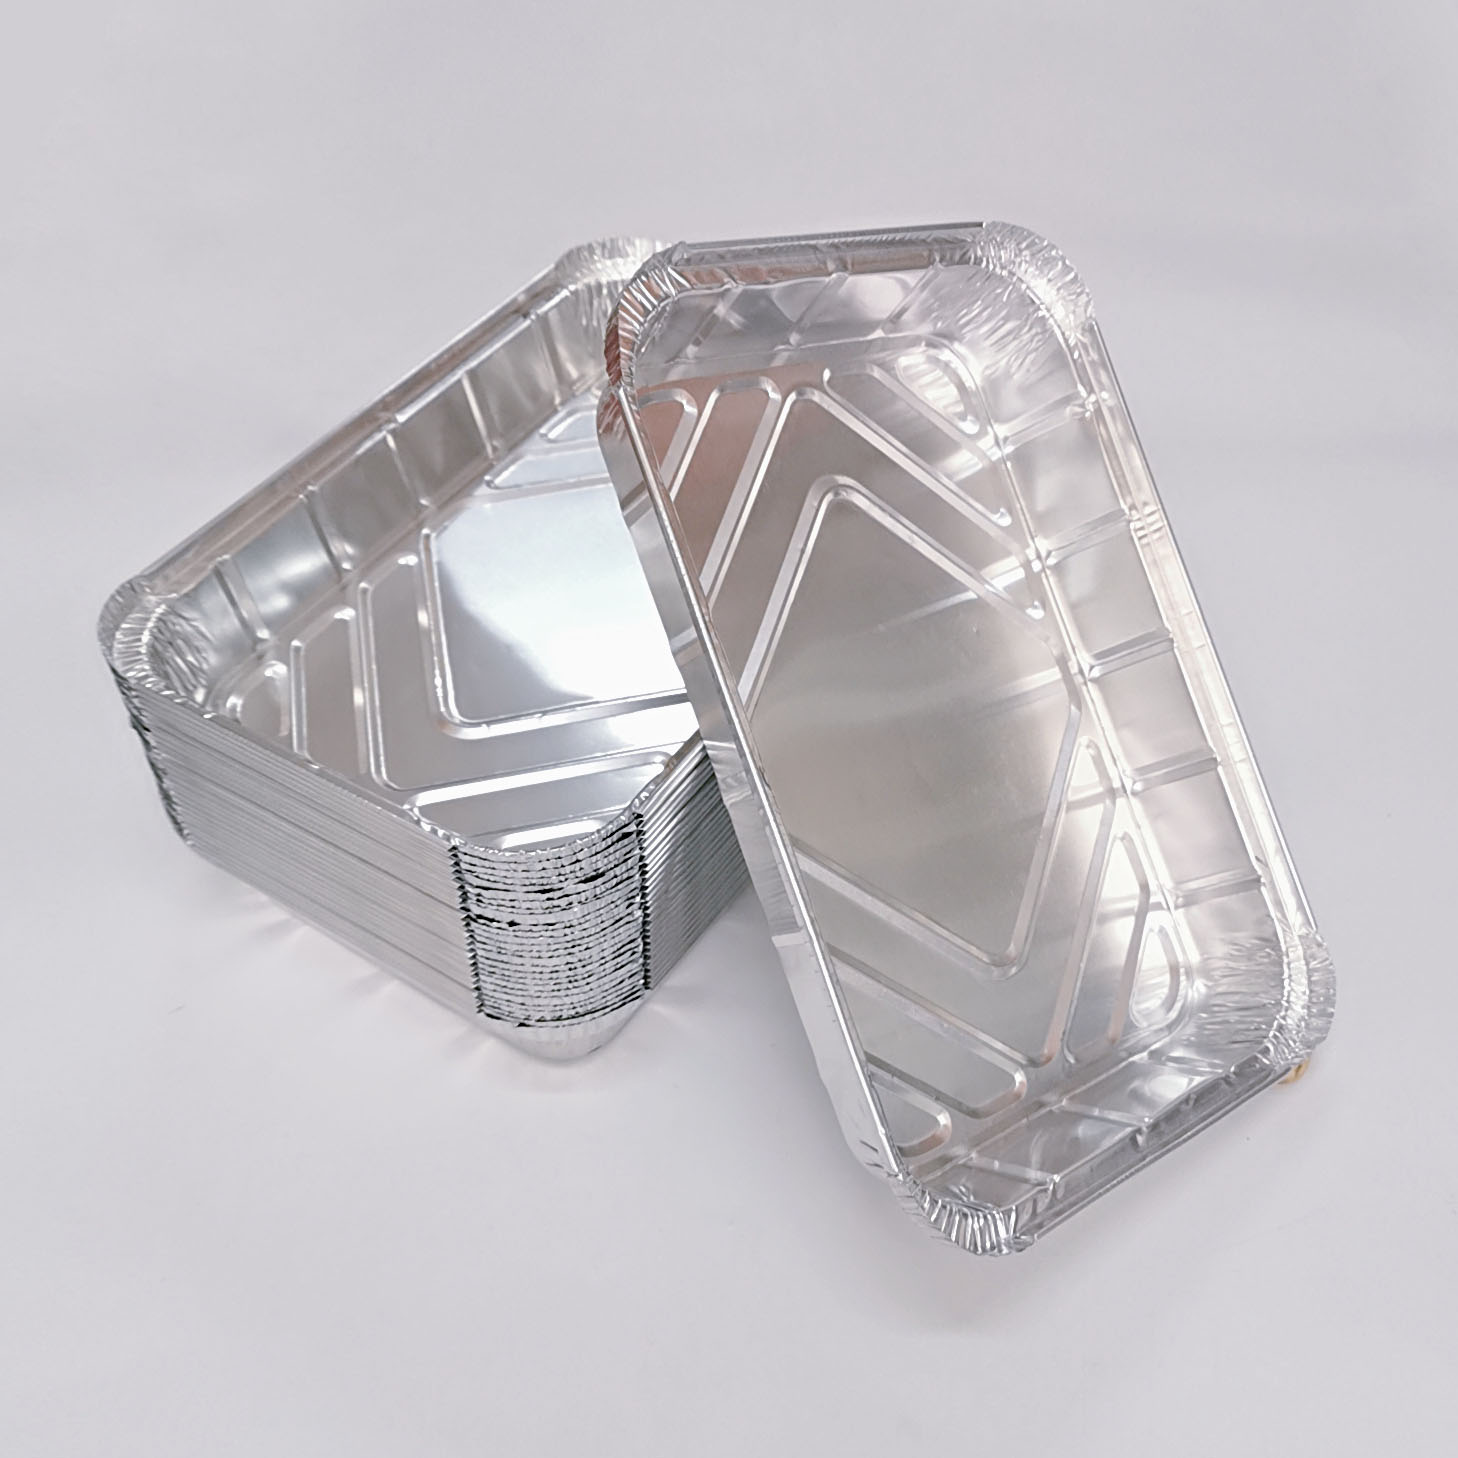 2200ml Rectangle Disposable Aluminum Baking Pans Oven Safe